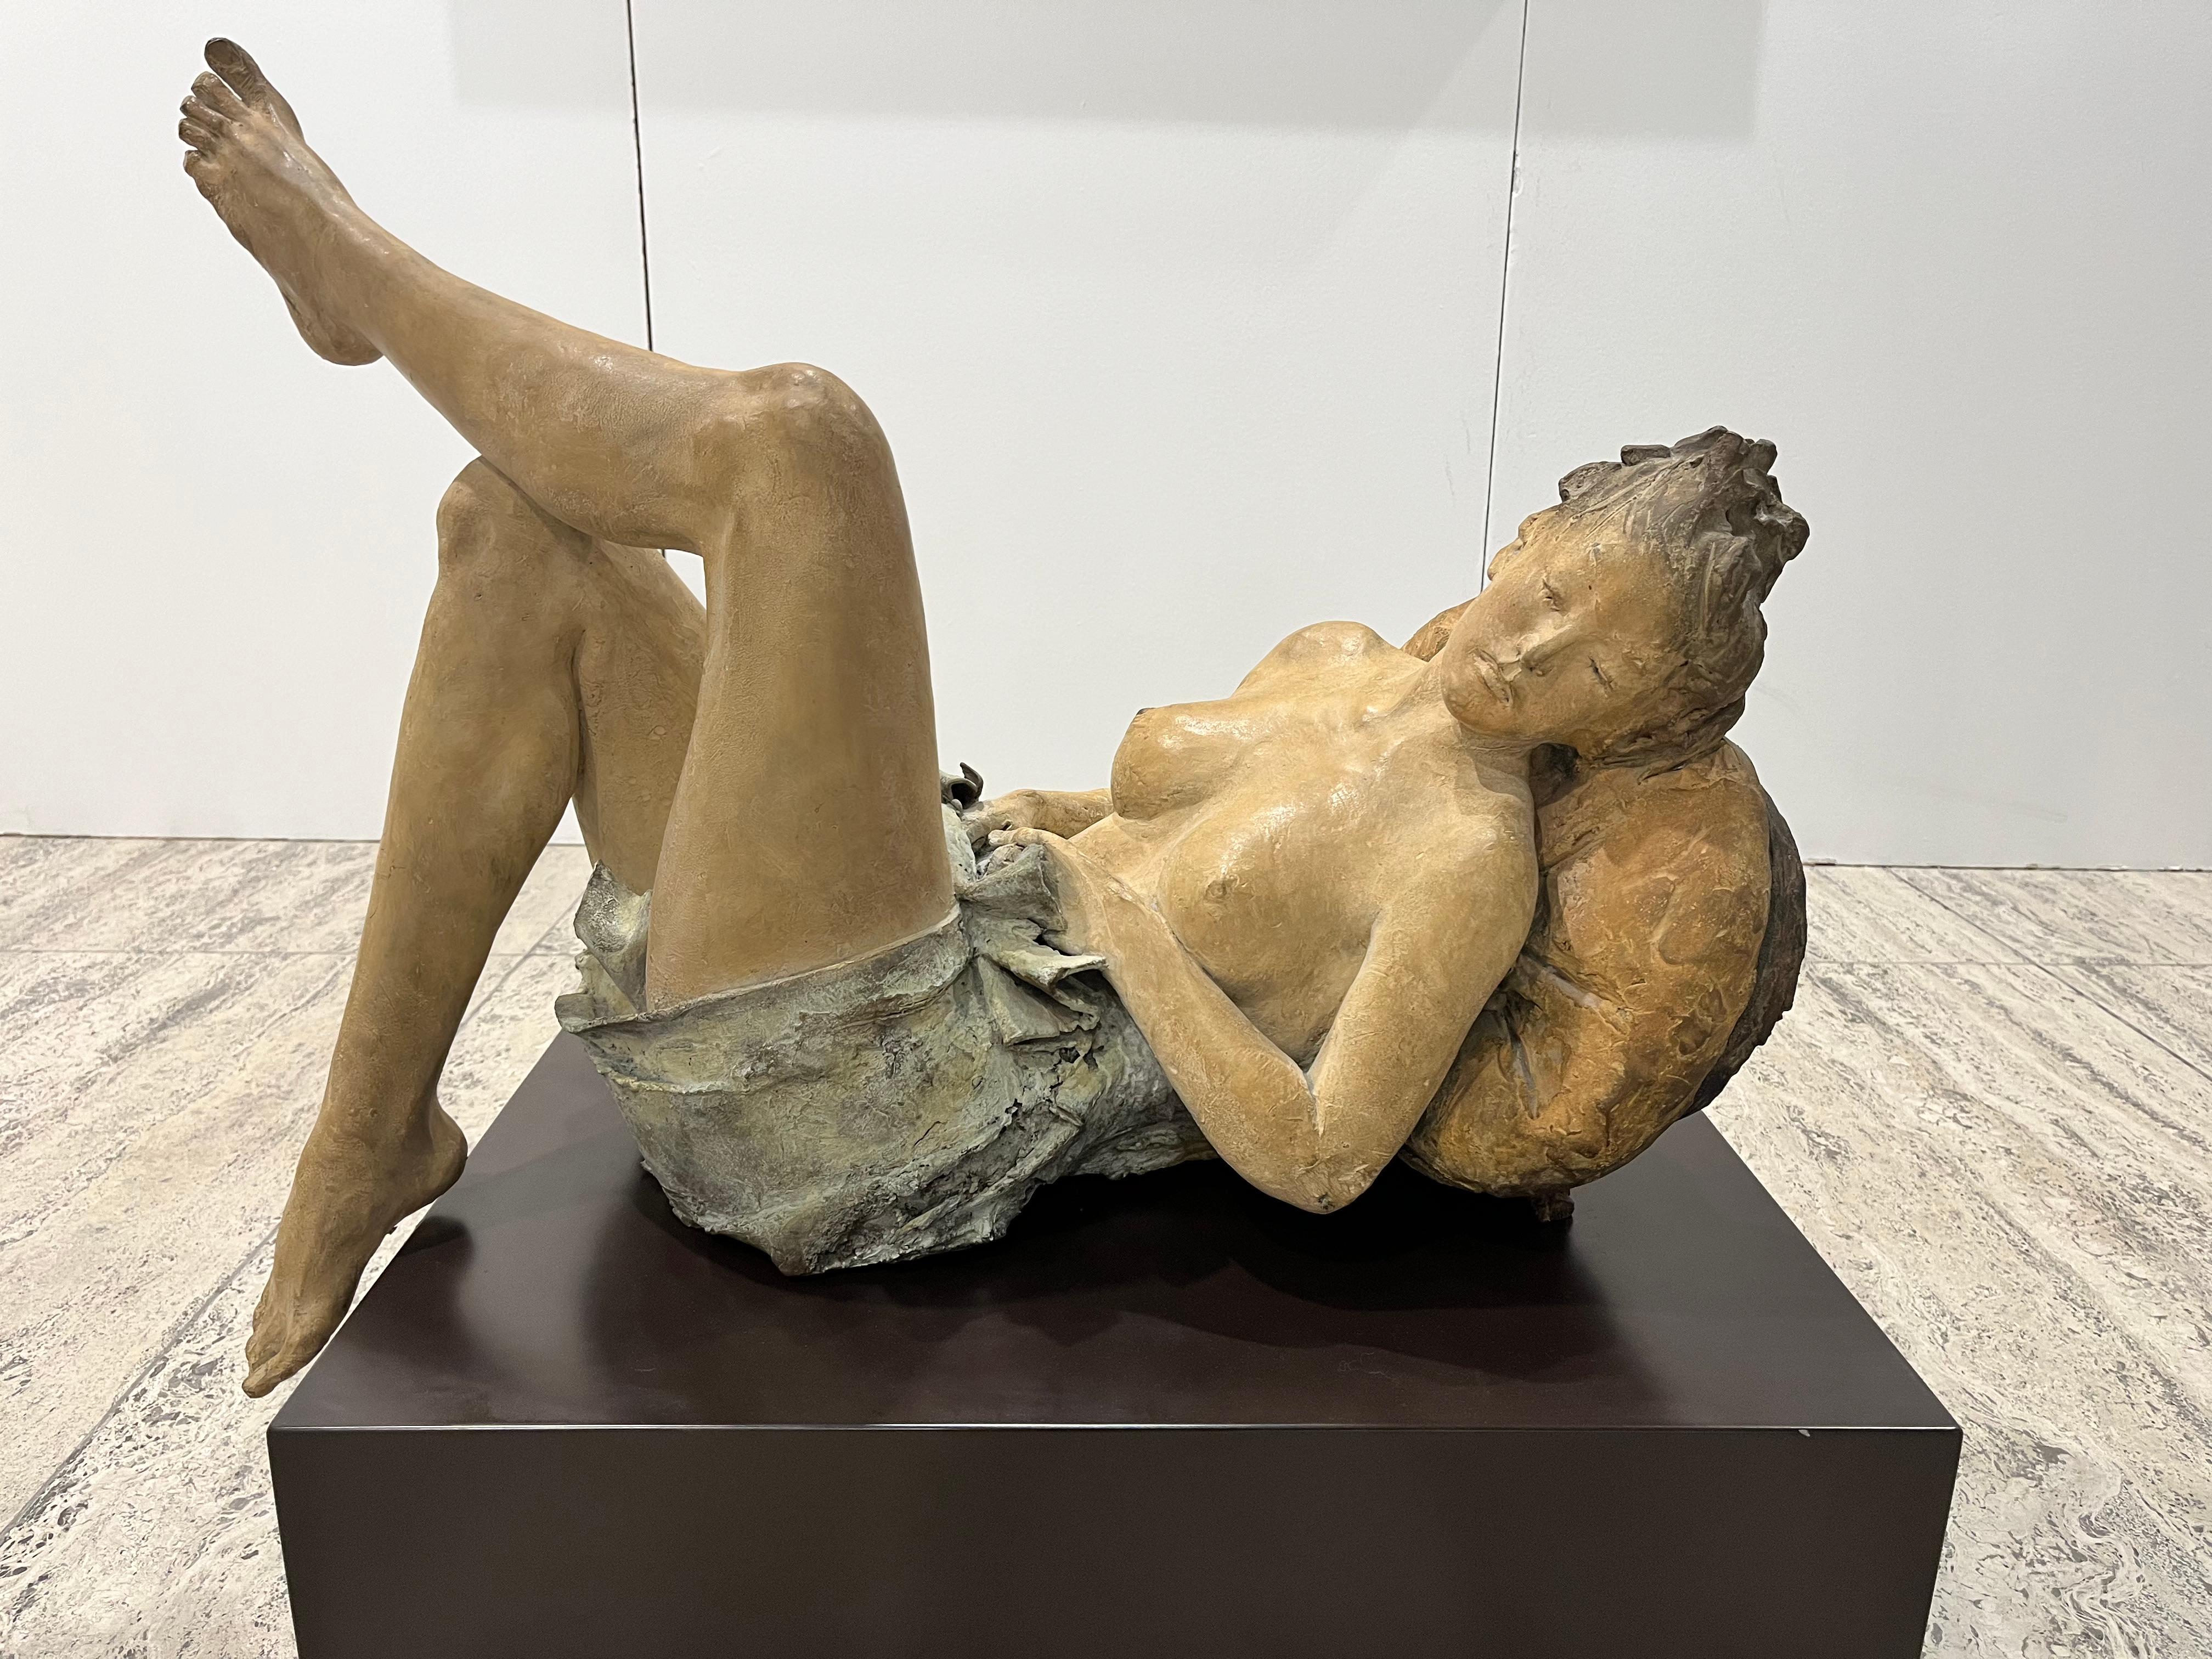 Fine beauty female nude sculpture in bronze, patina ochre and azur, dust blue